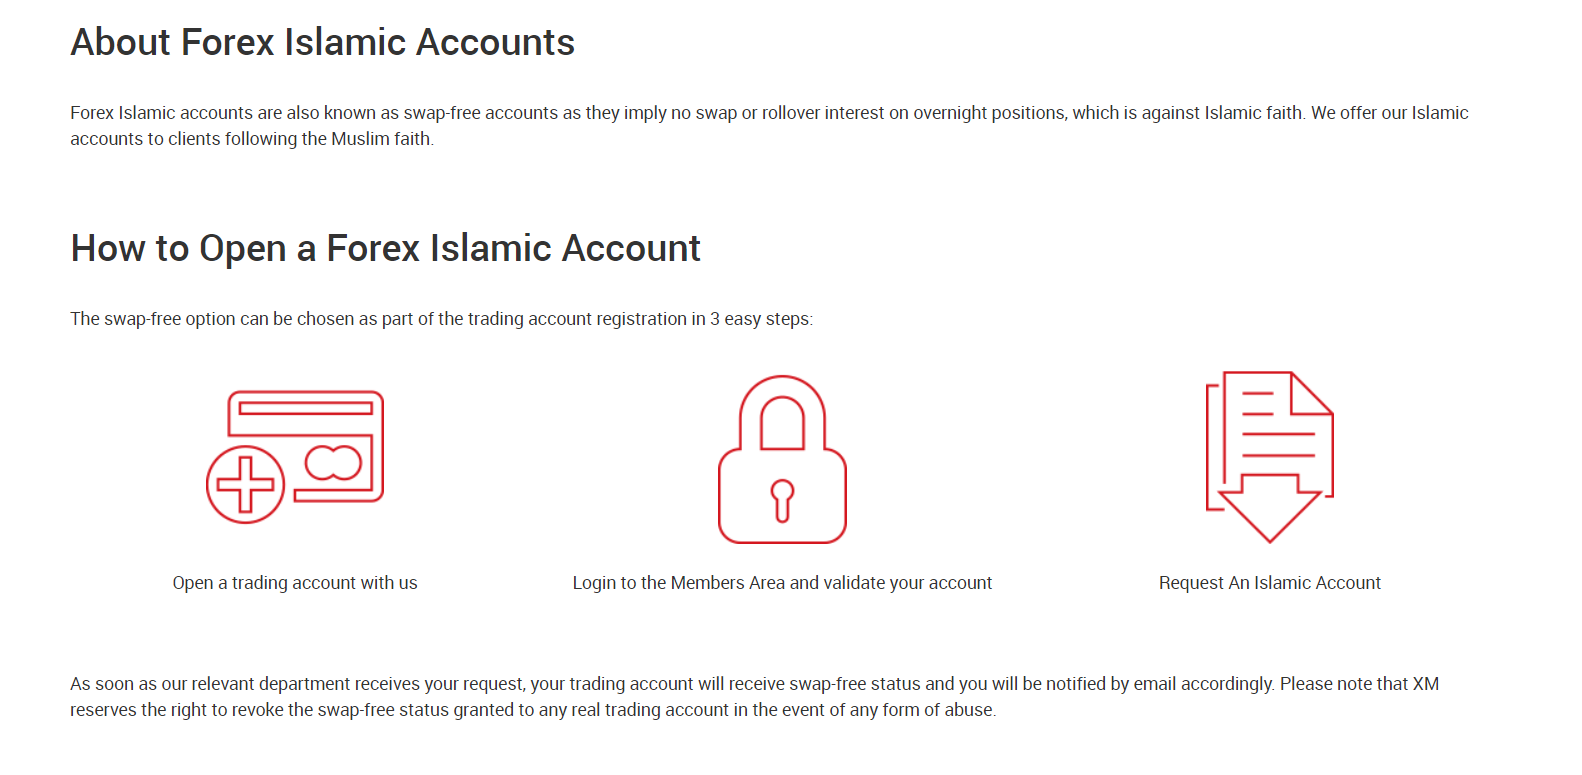 XM Islamic Account